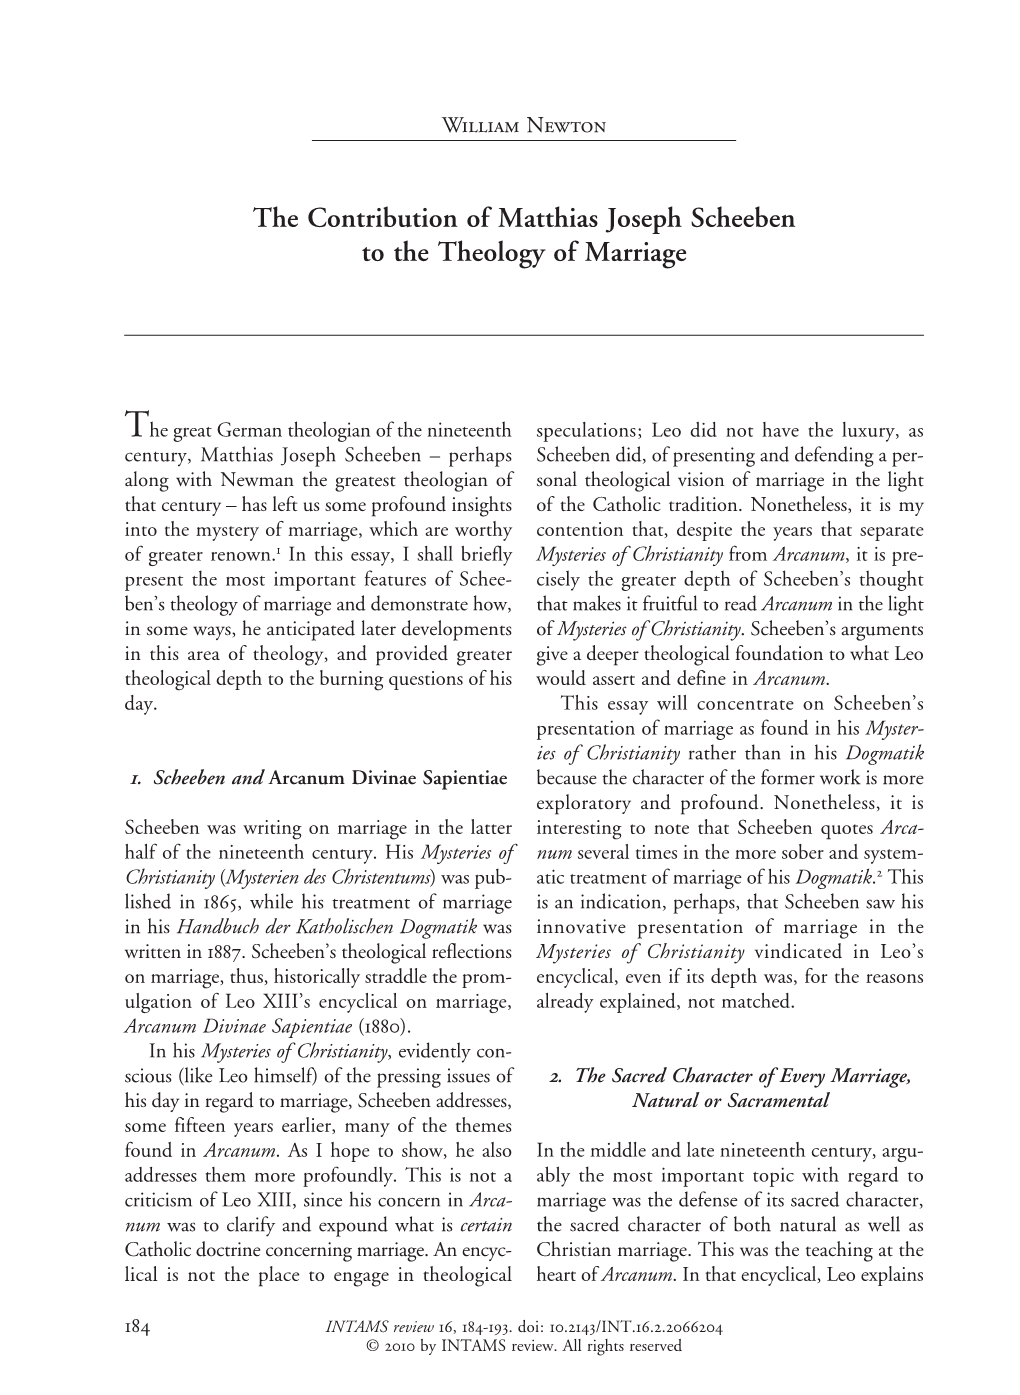 The Contribution of Matthias Joseph Scheeben to the Theology of Marriage